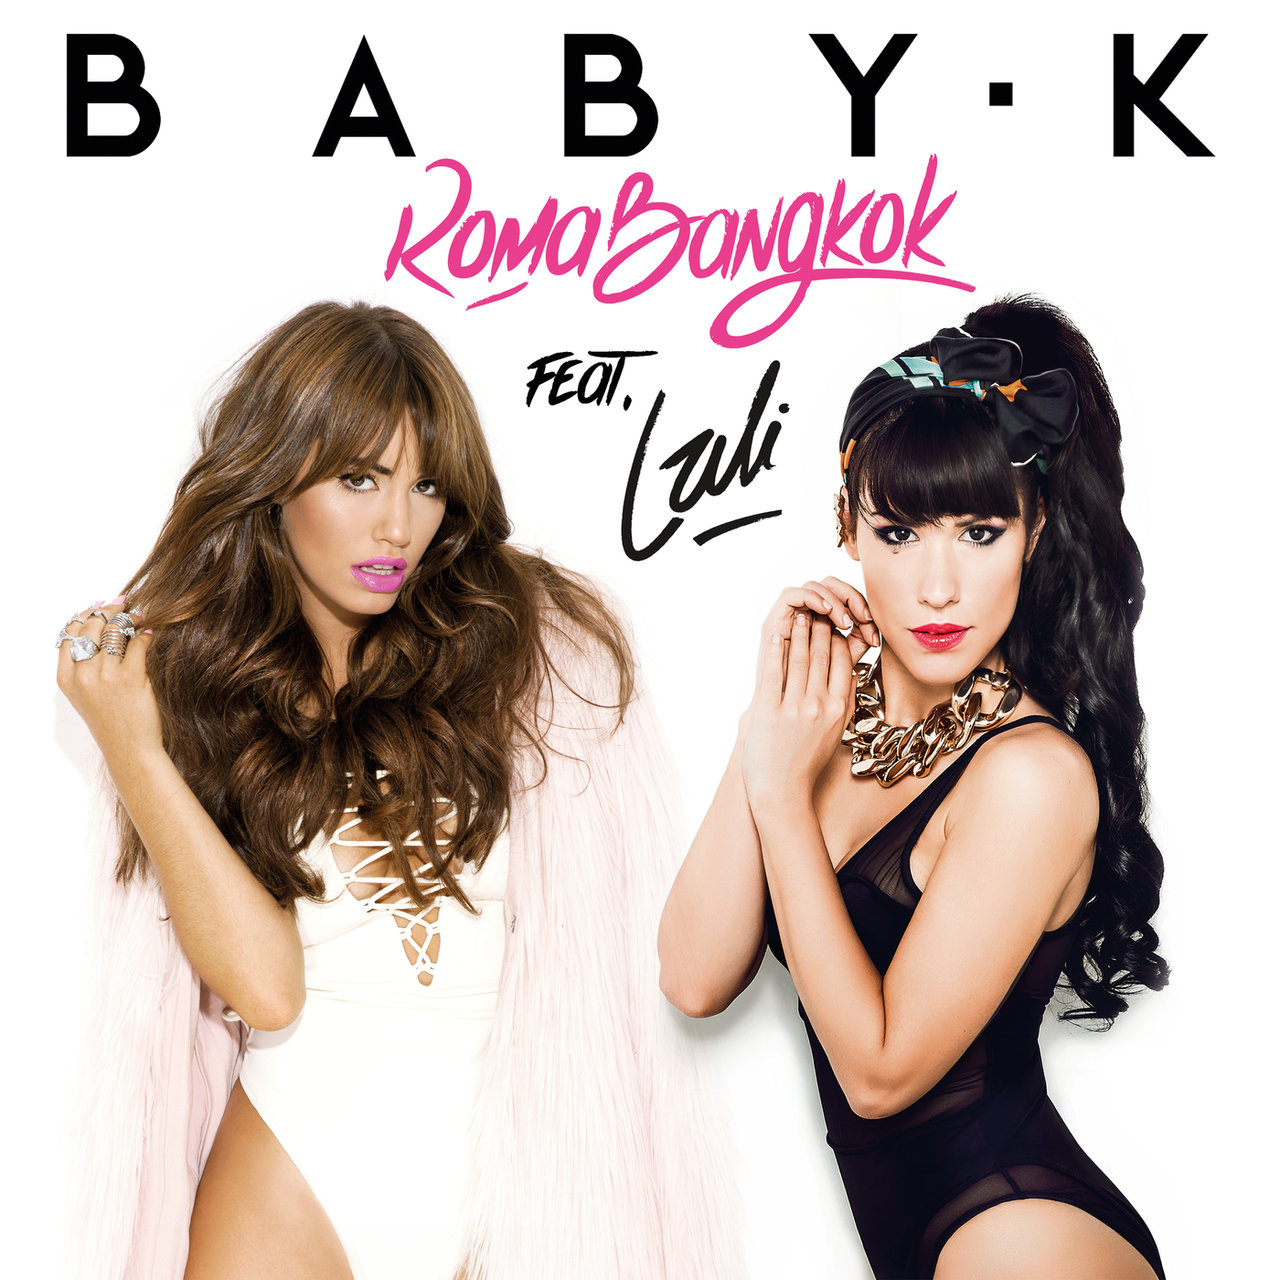 Baby K featuring Lali — Roma - Bangkok cover artwork